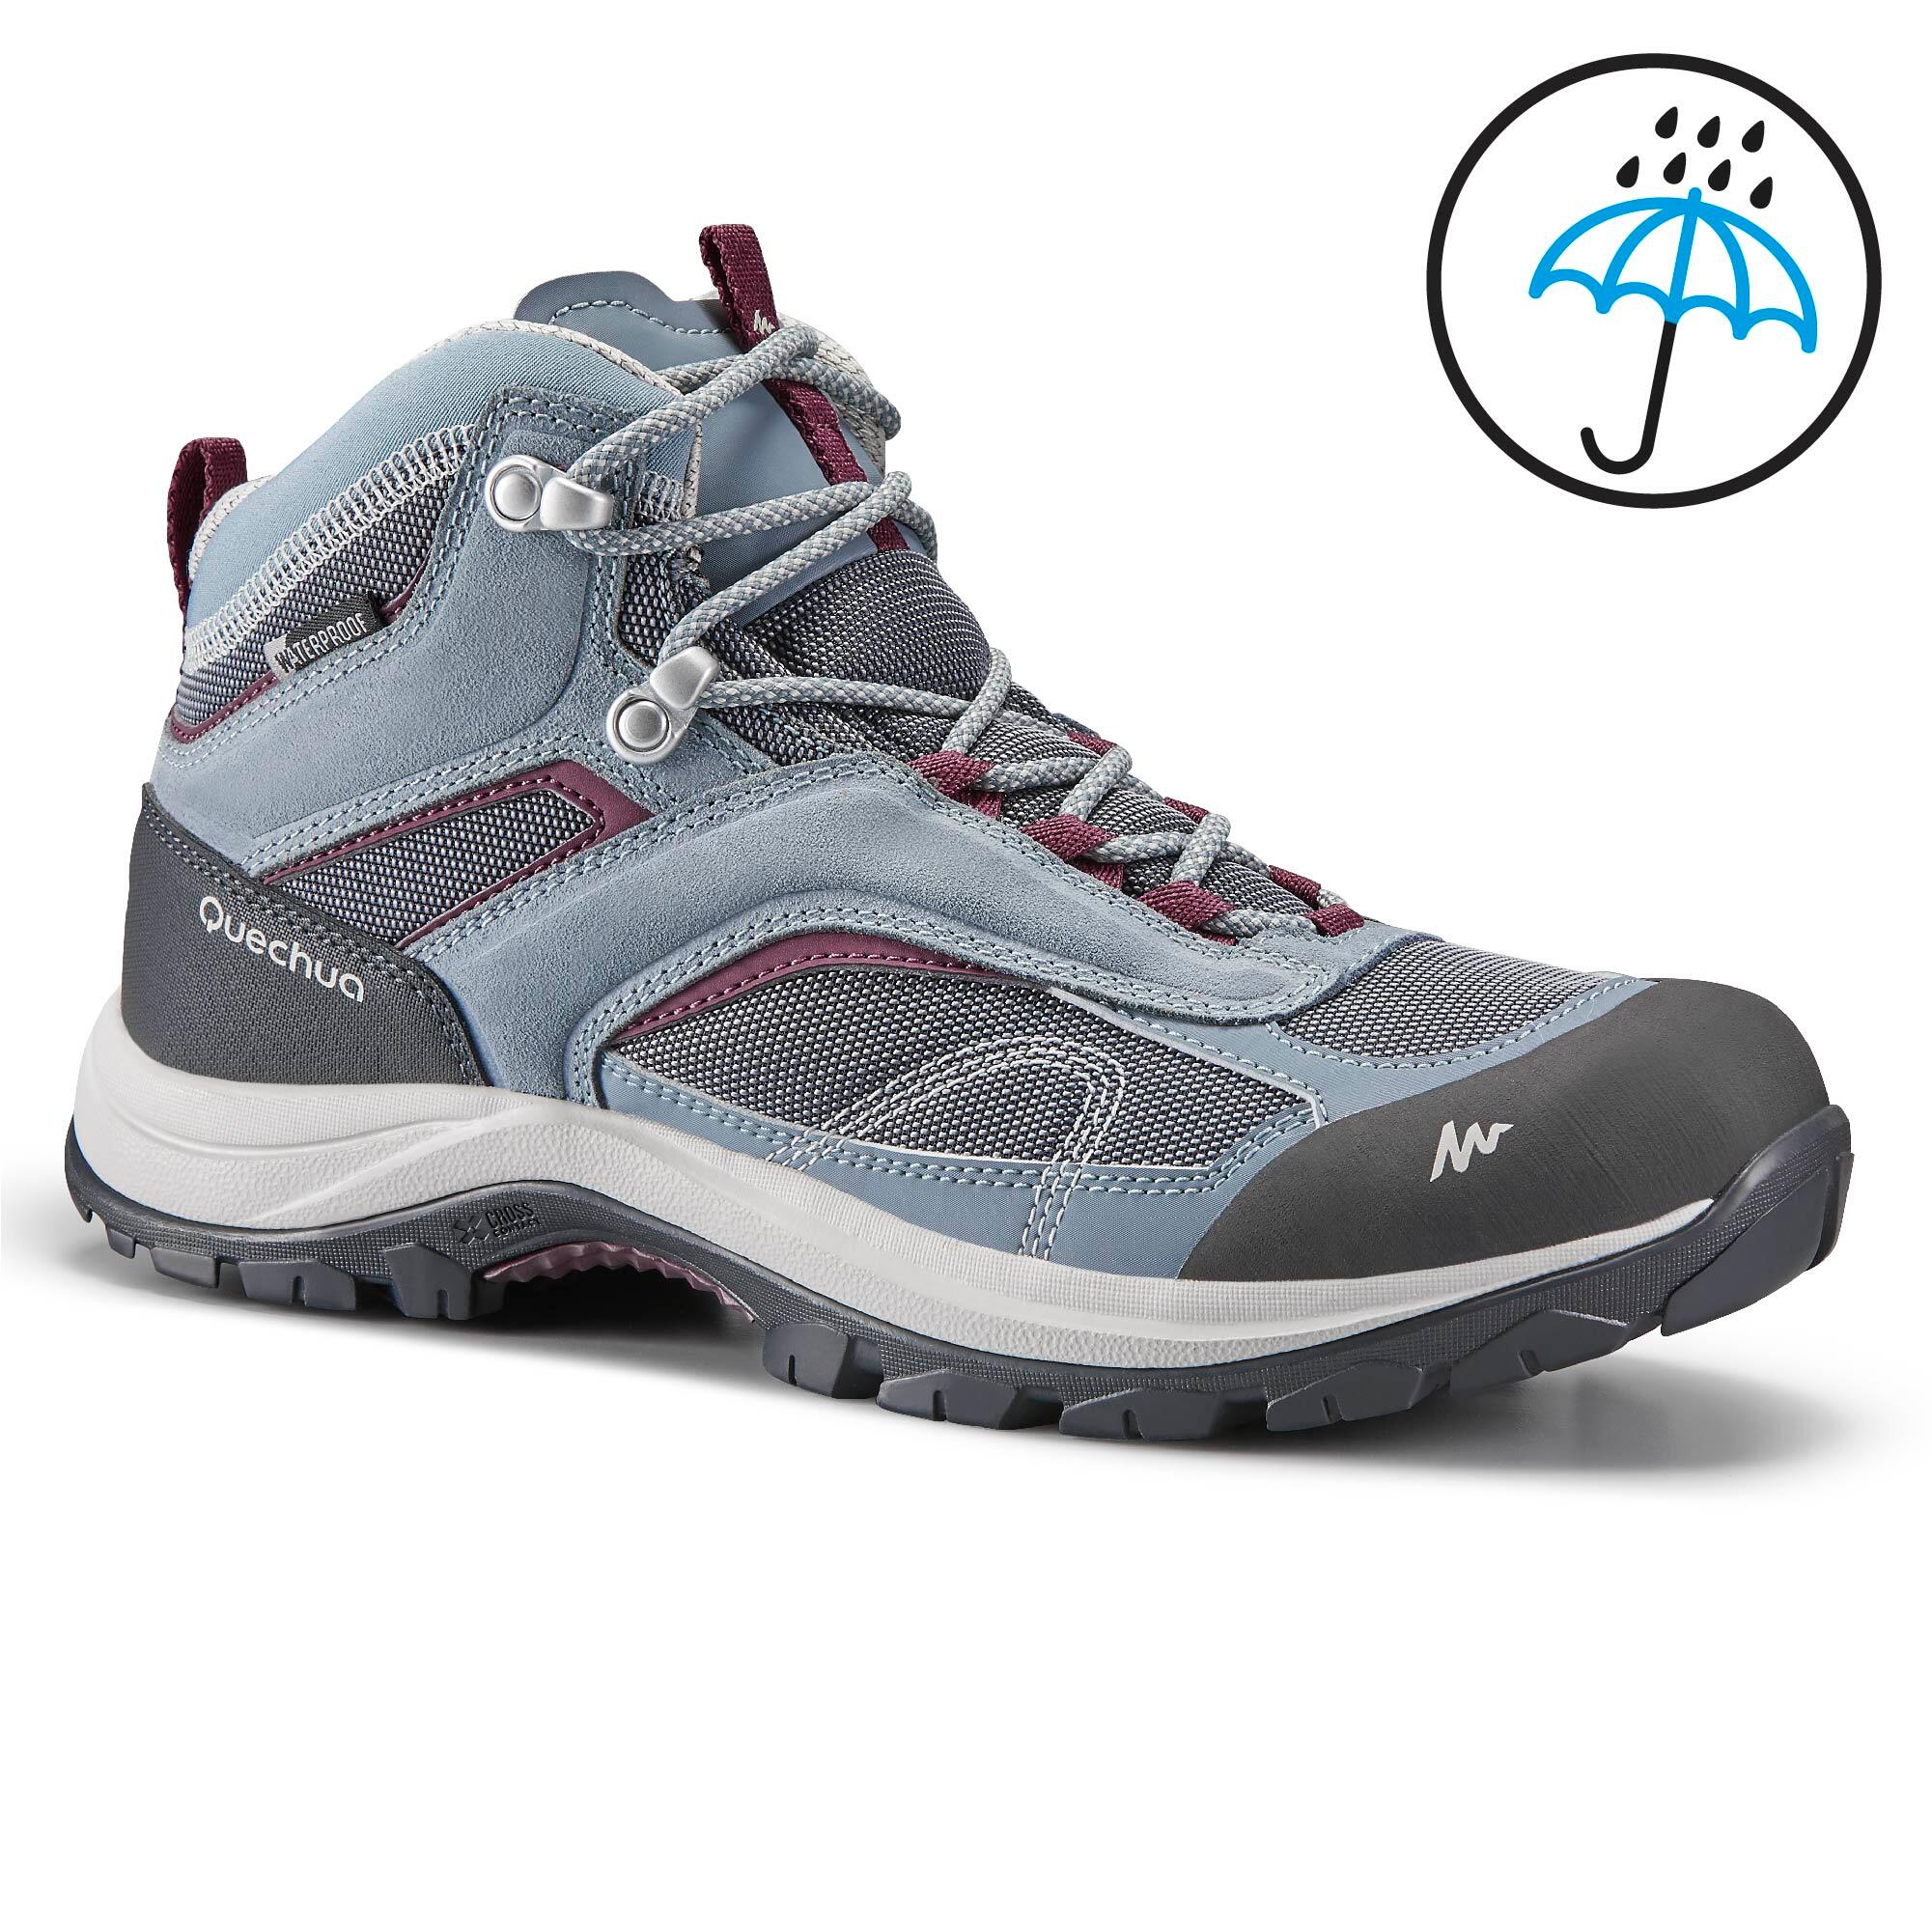 rainproof walking shoes